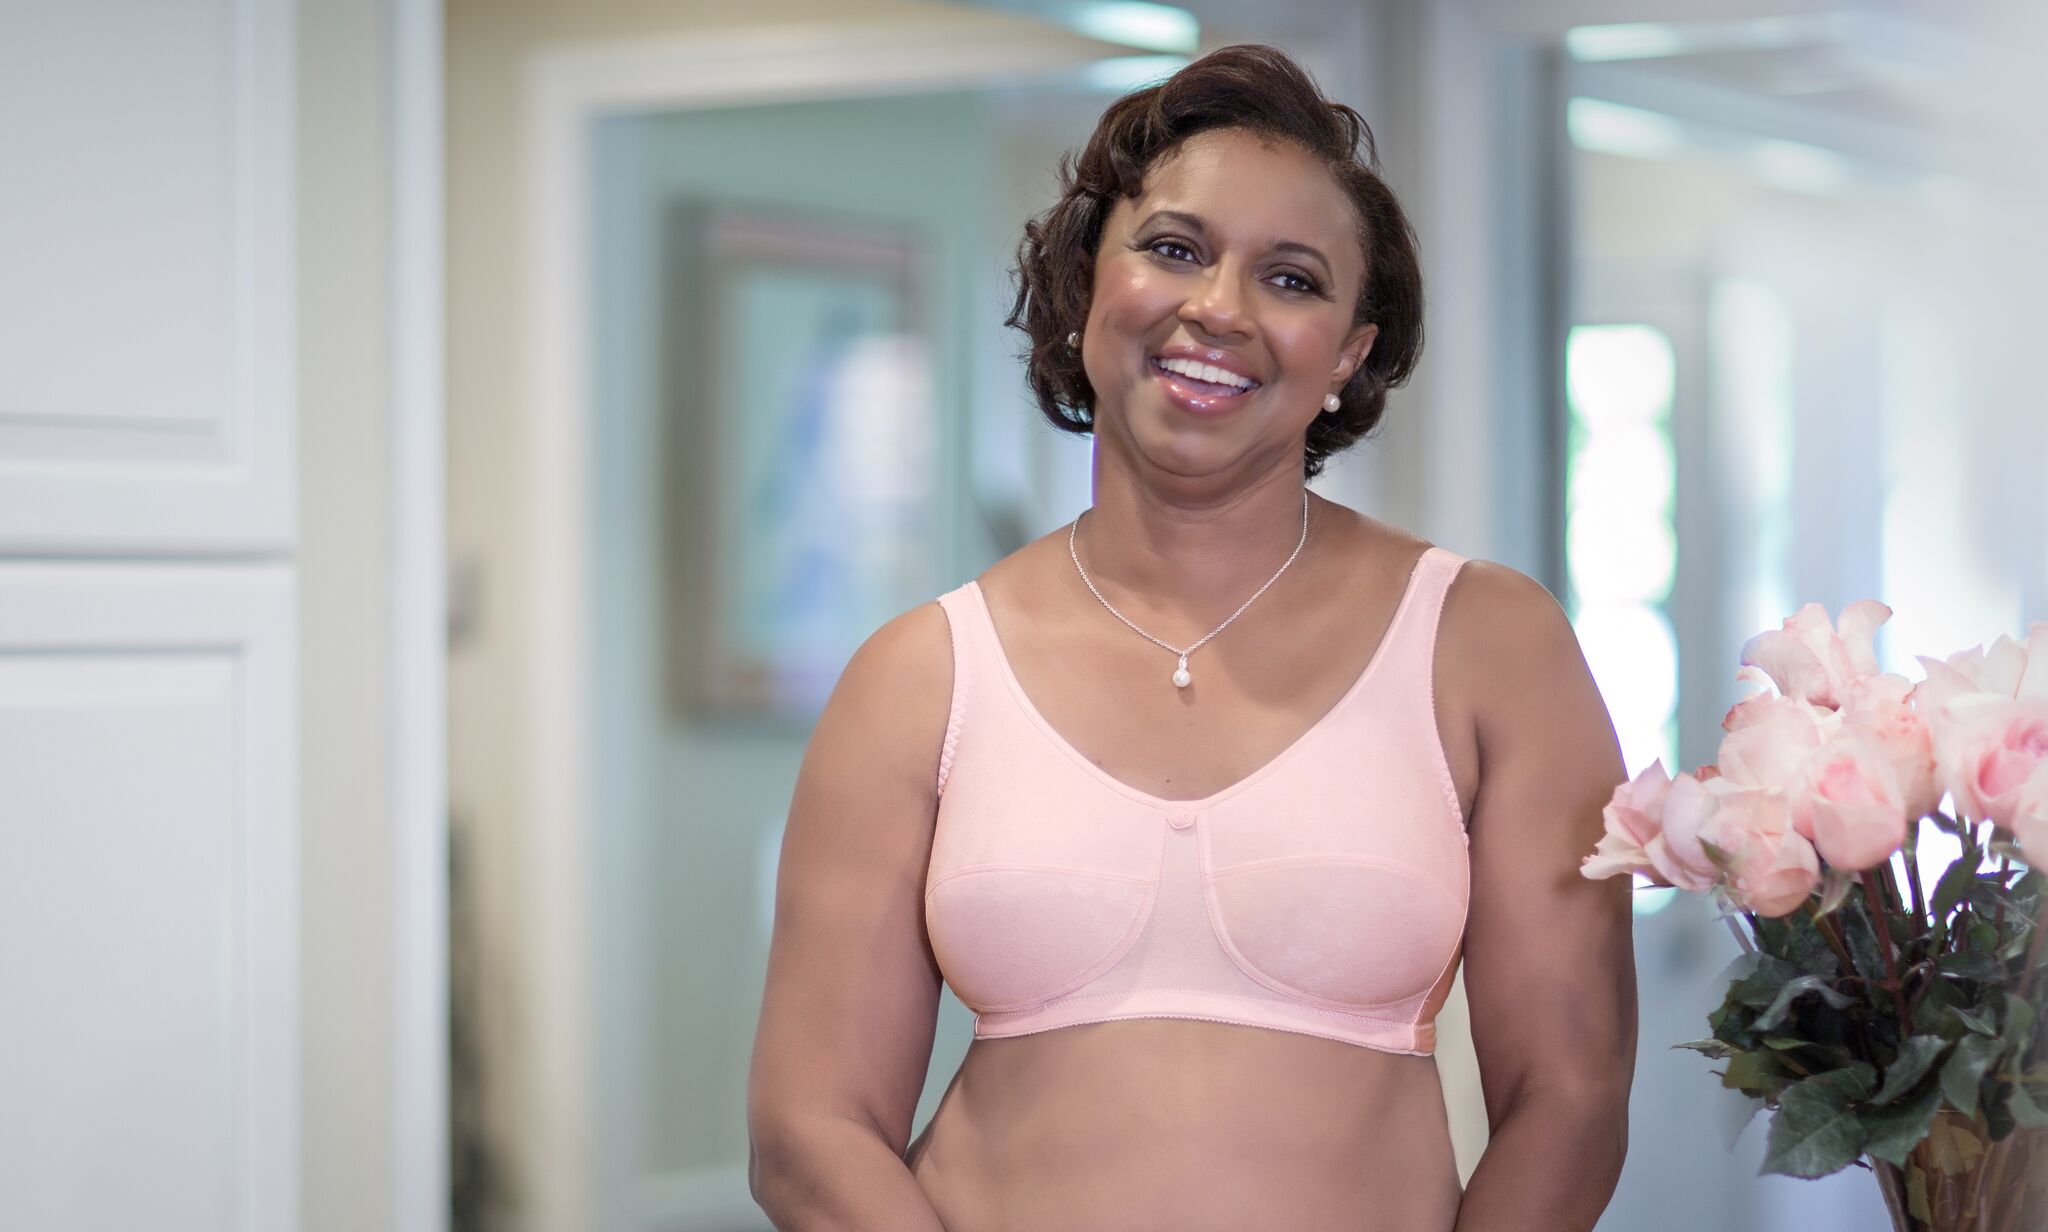 American Breast Care Mastectomy Bra Regalia Size 42A Beige at